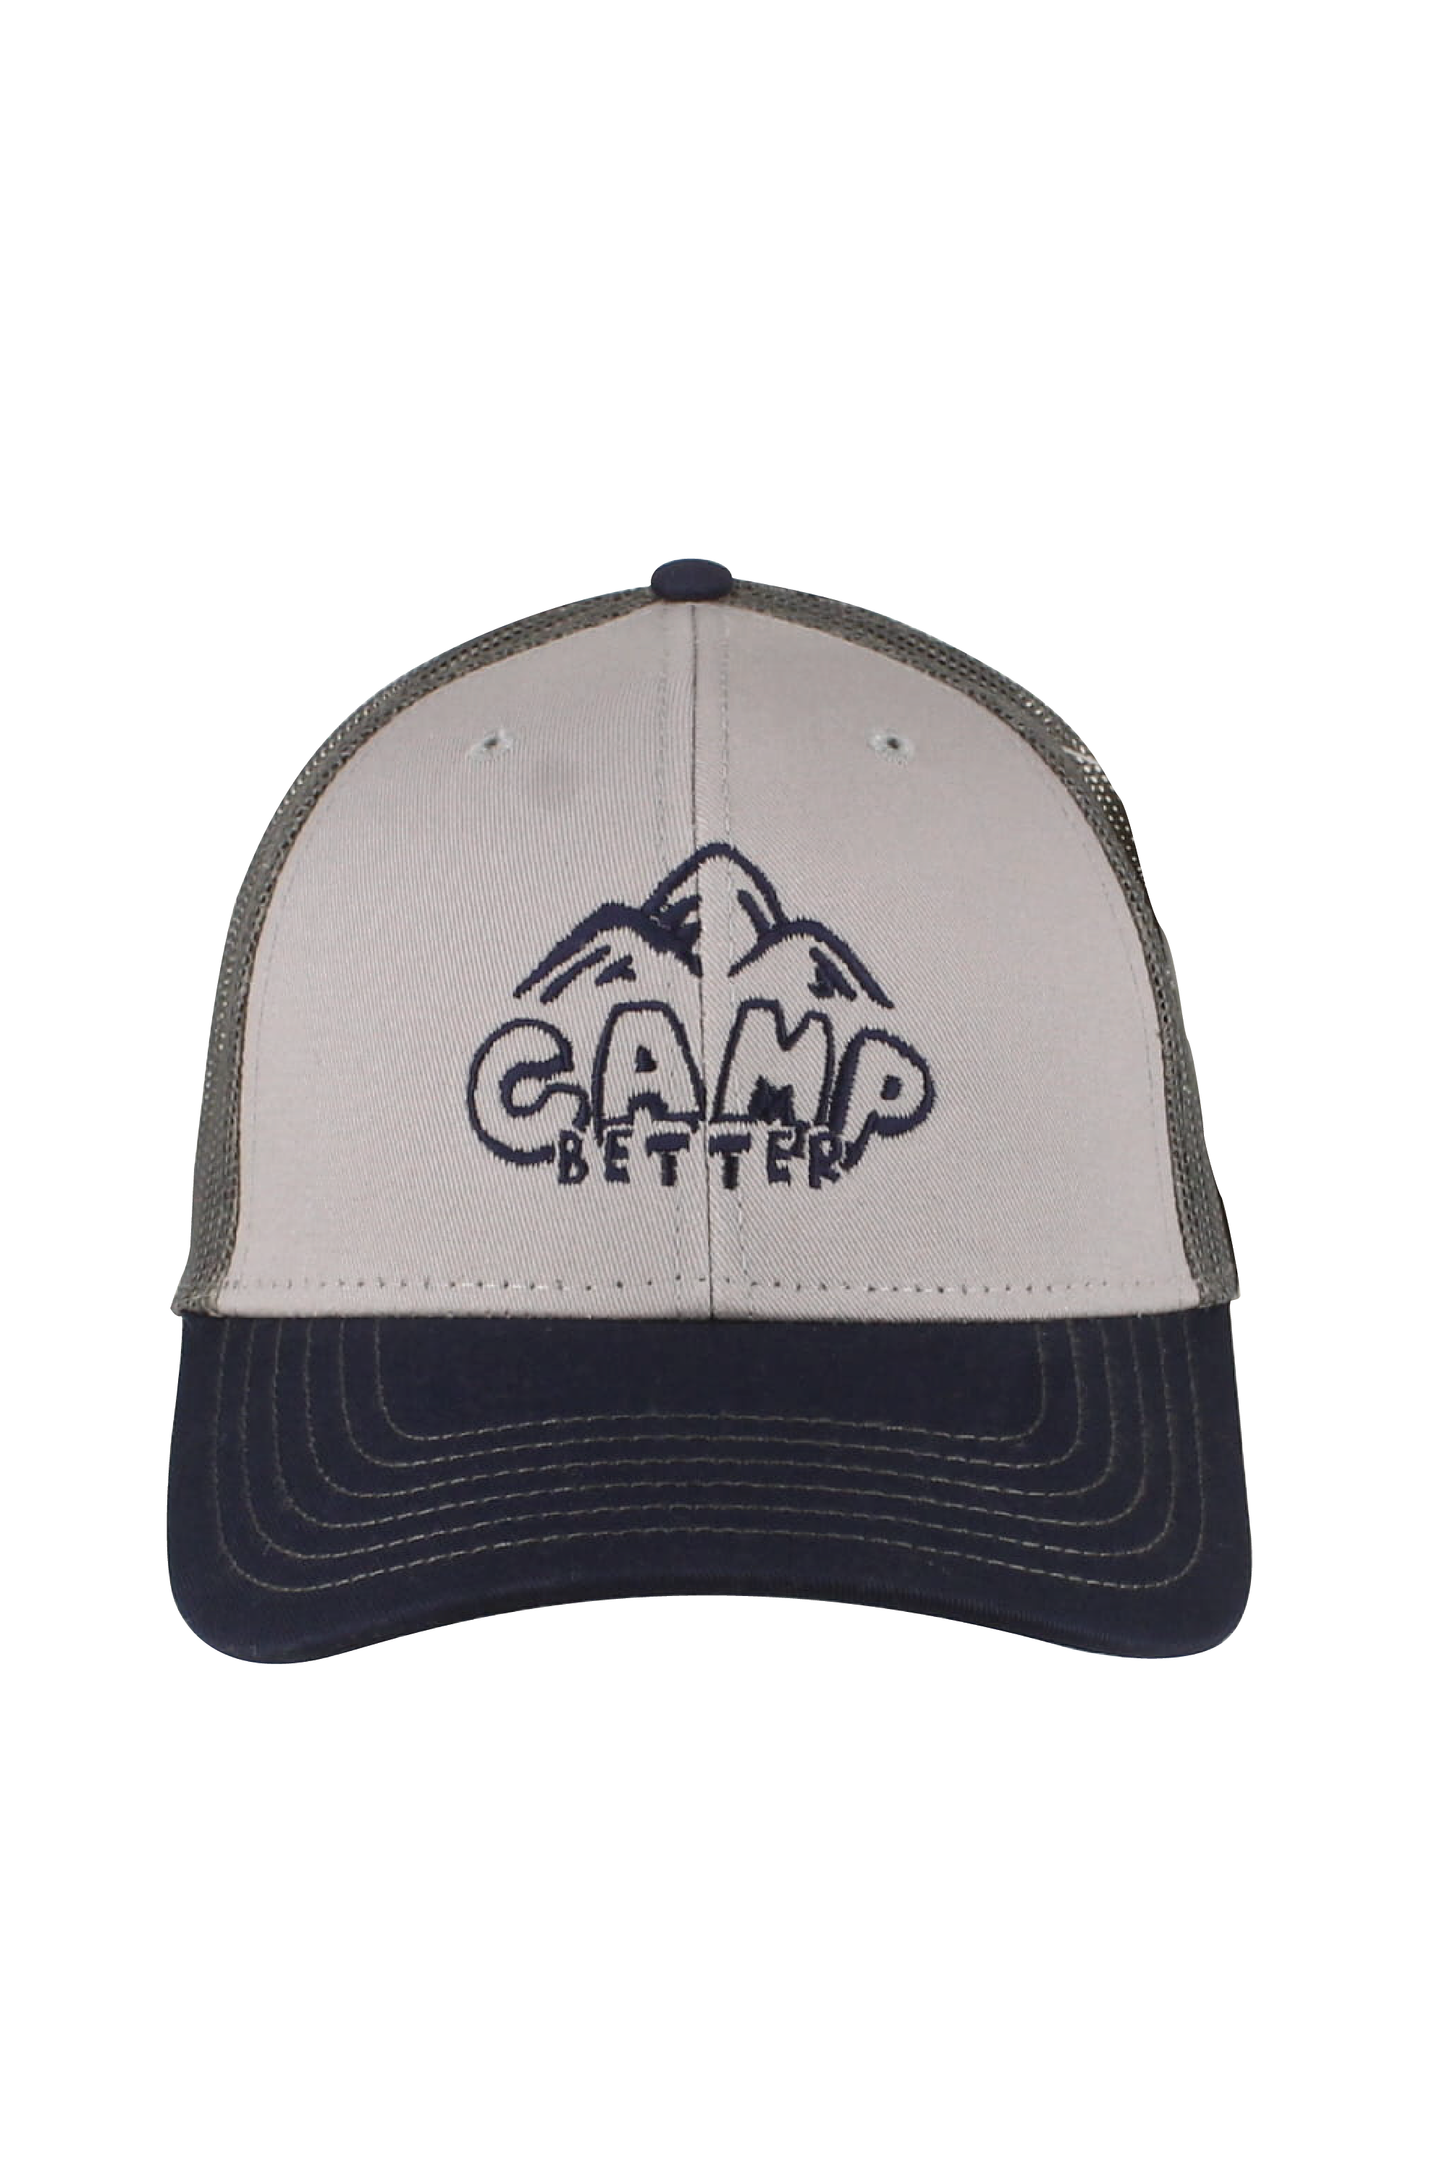 Camp Better Mountains Cap